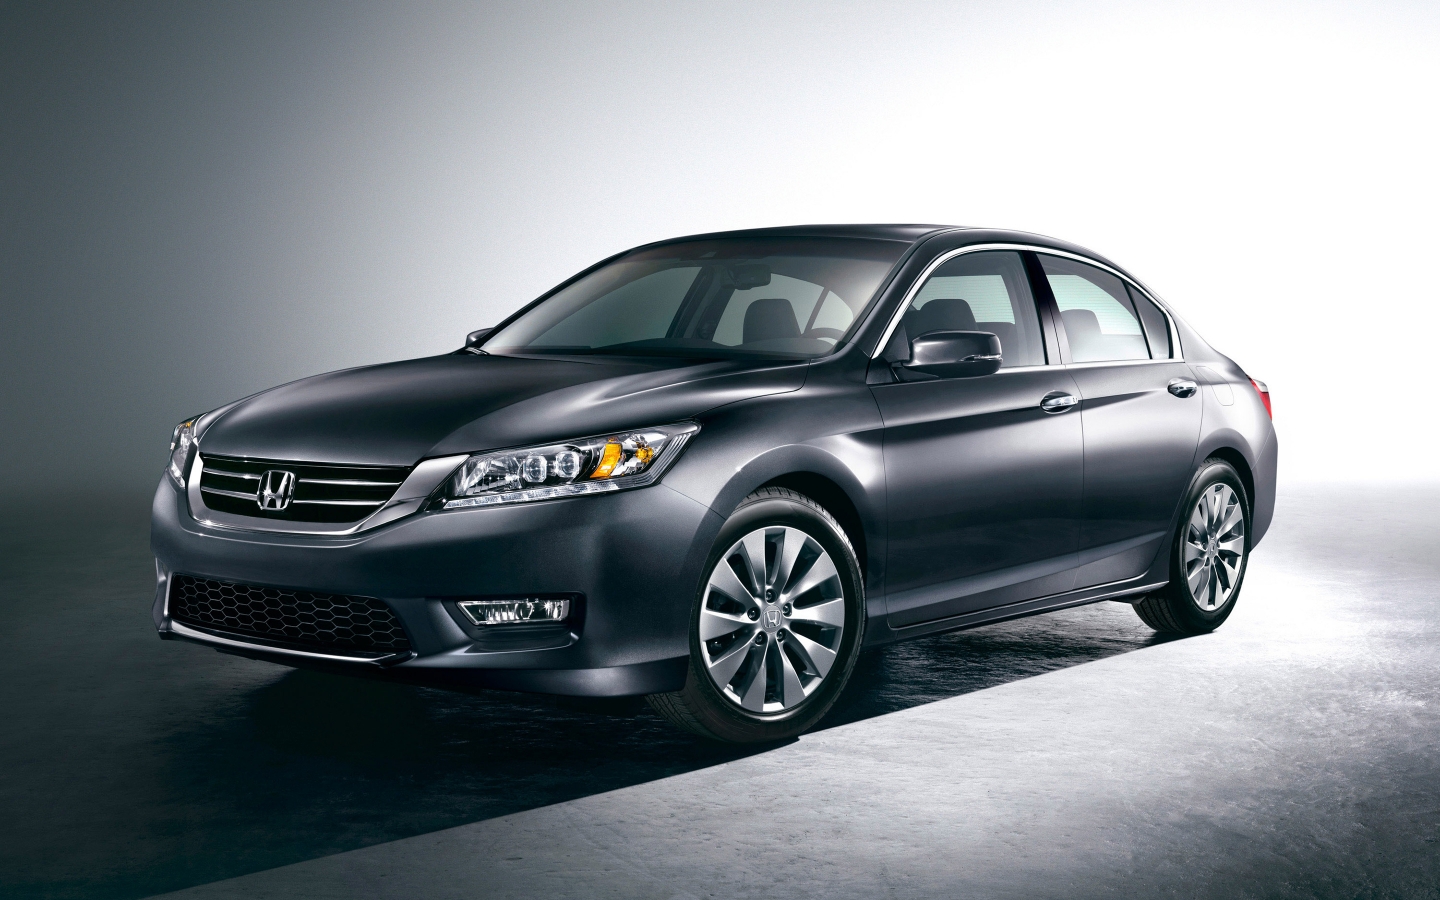 2013 Honda Accord for 1440 x 900 widescreen resolution